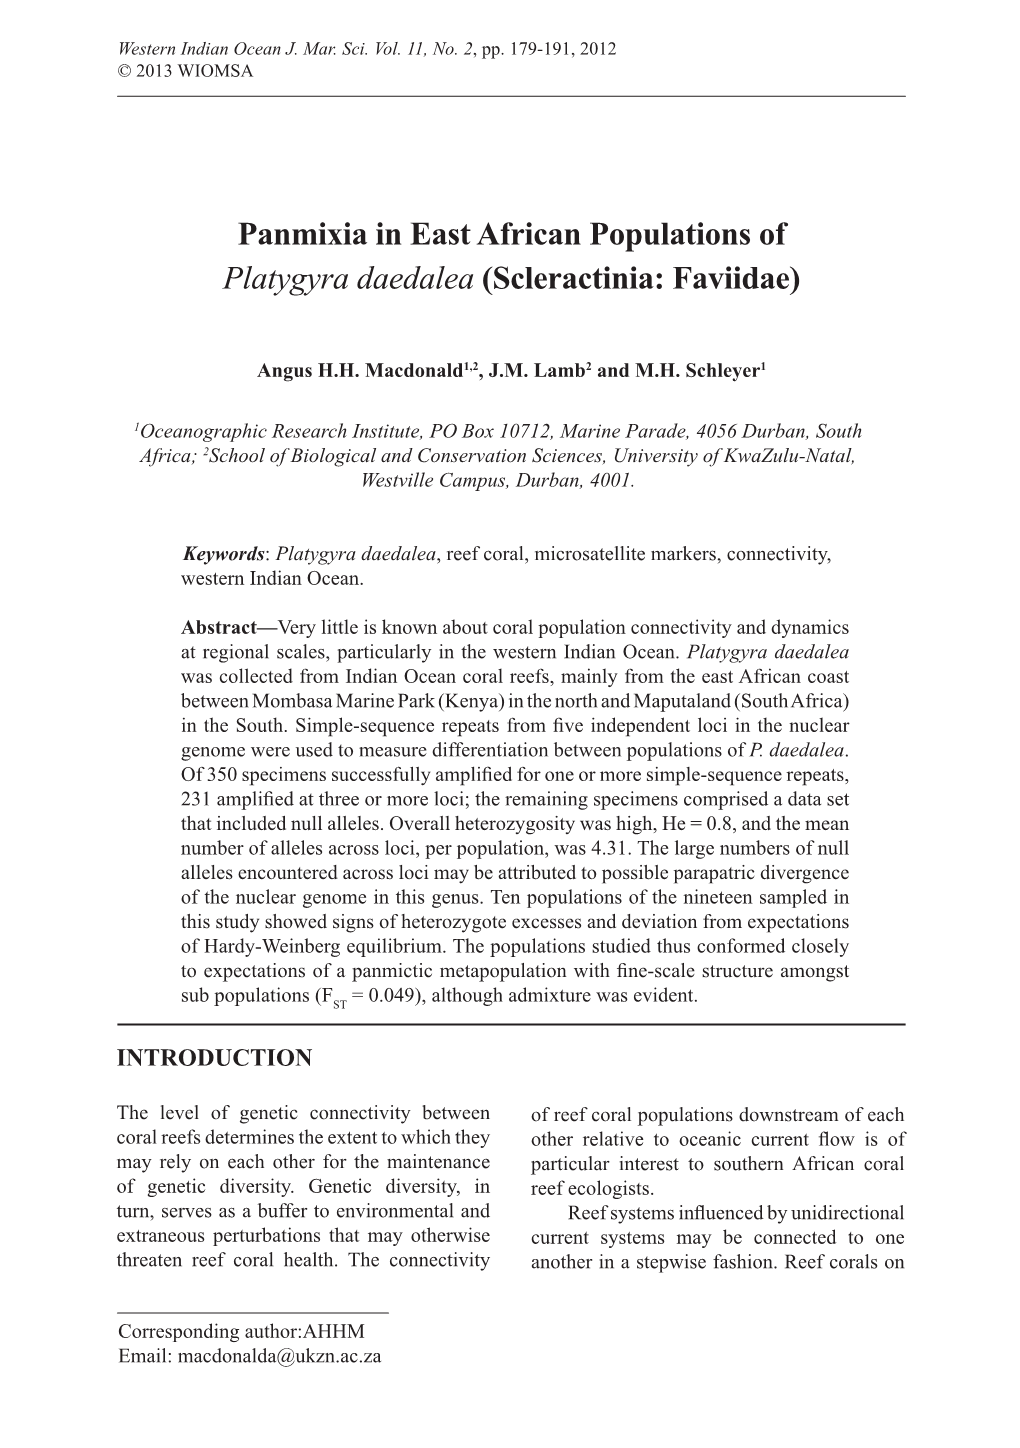 Panmixia in East African Populations of Platygyra Daedalea (Scleractinia: Faviidae)